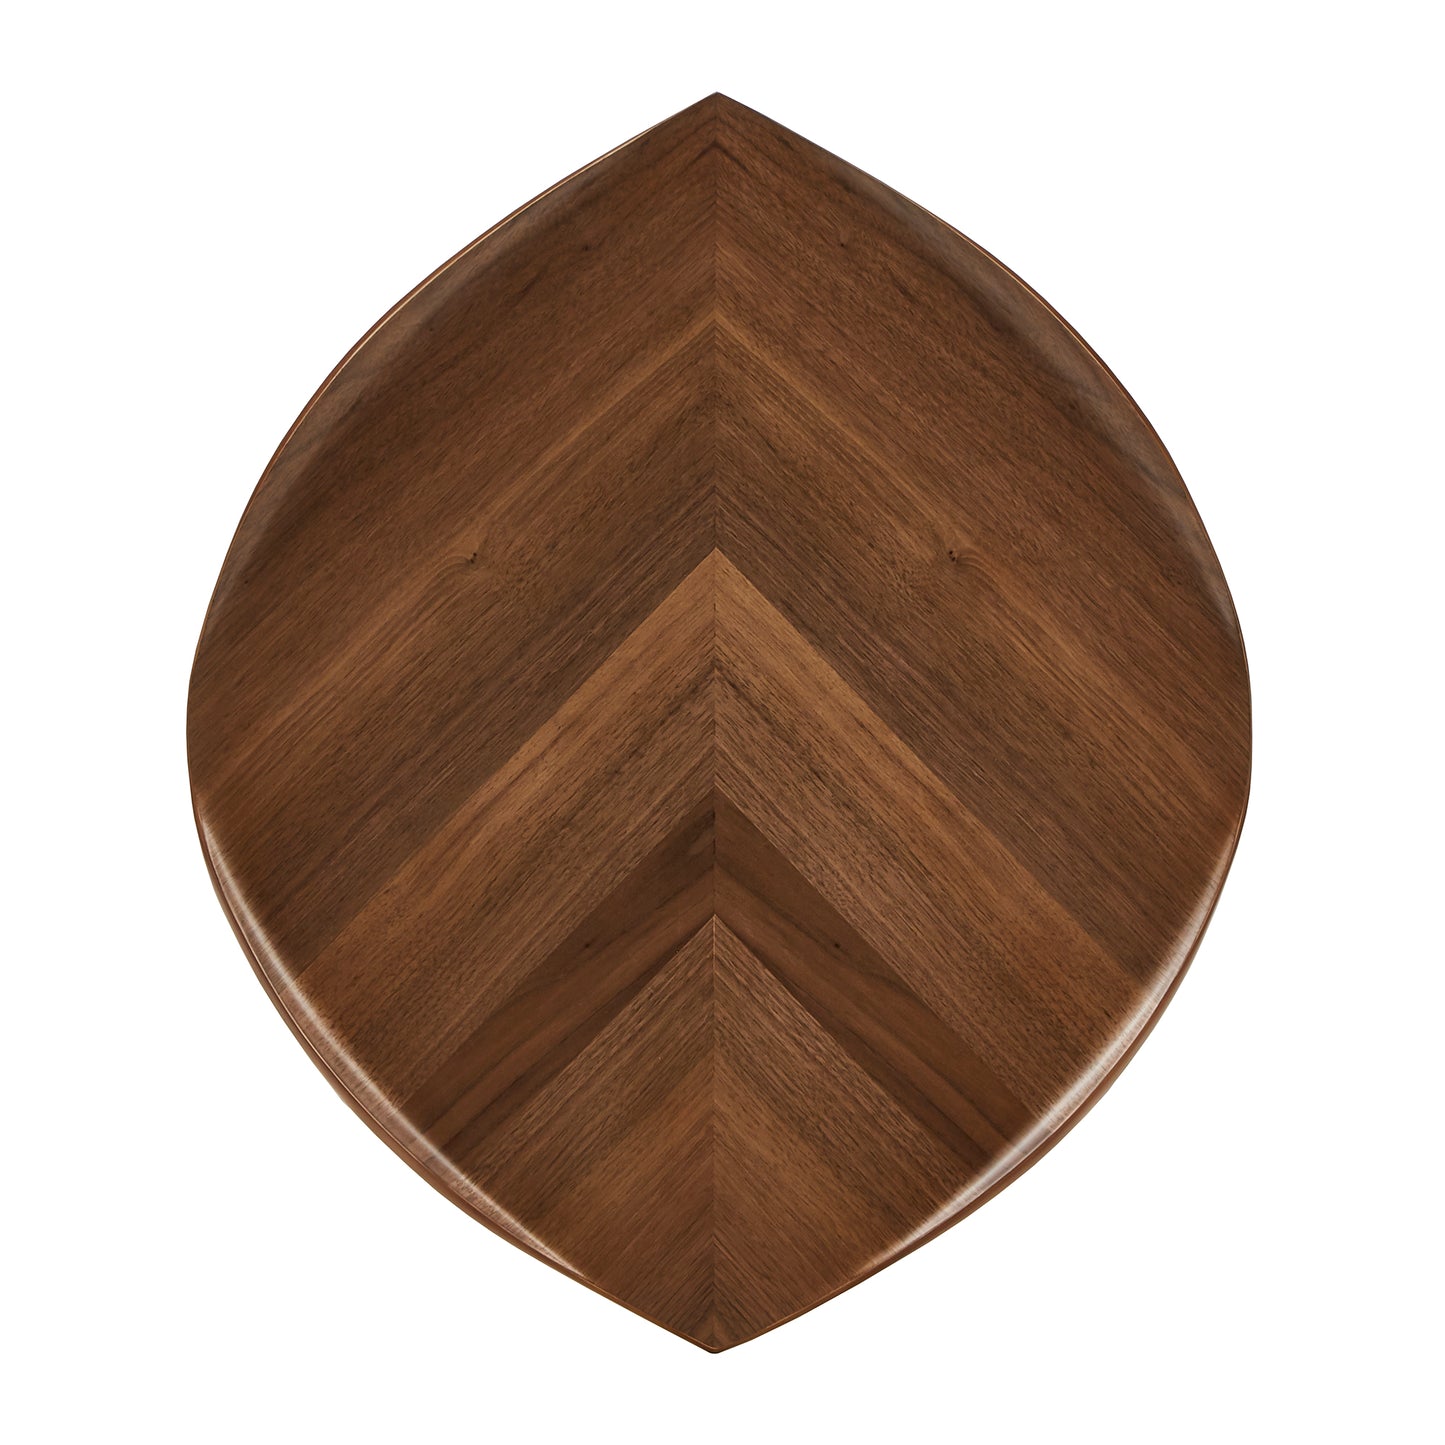 Wood Finish Leaf Shape End Table - Walnut Finish End Table